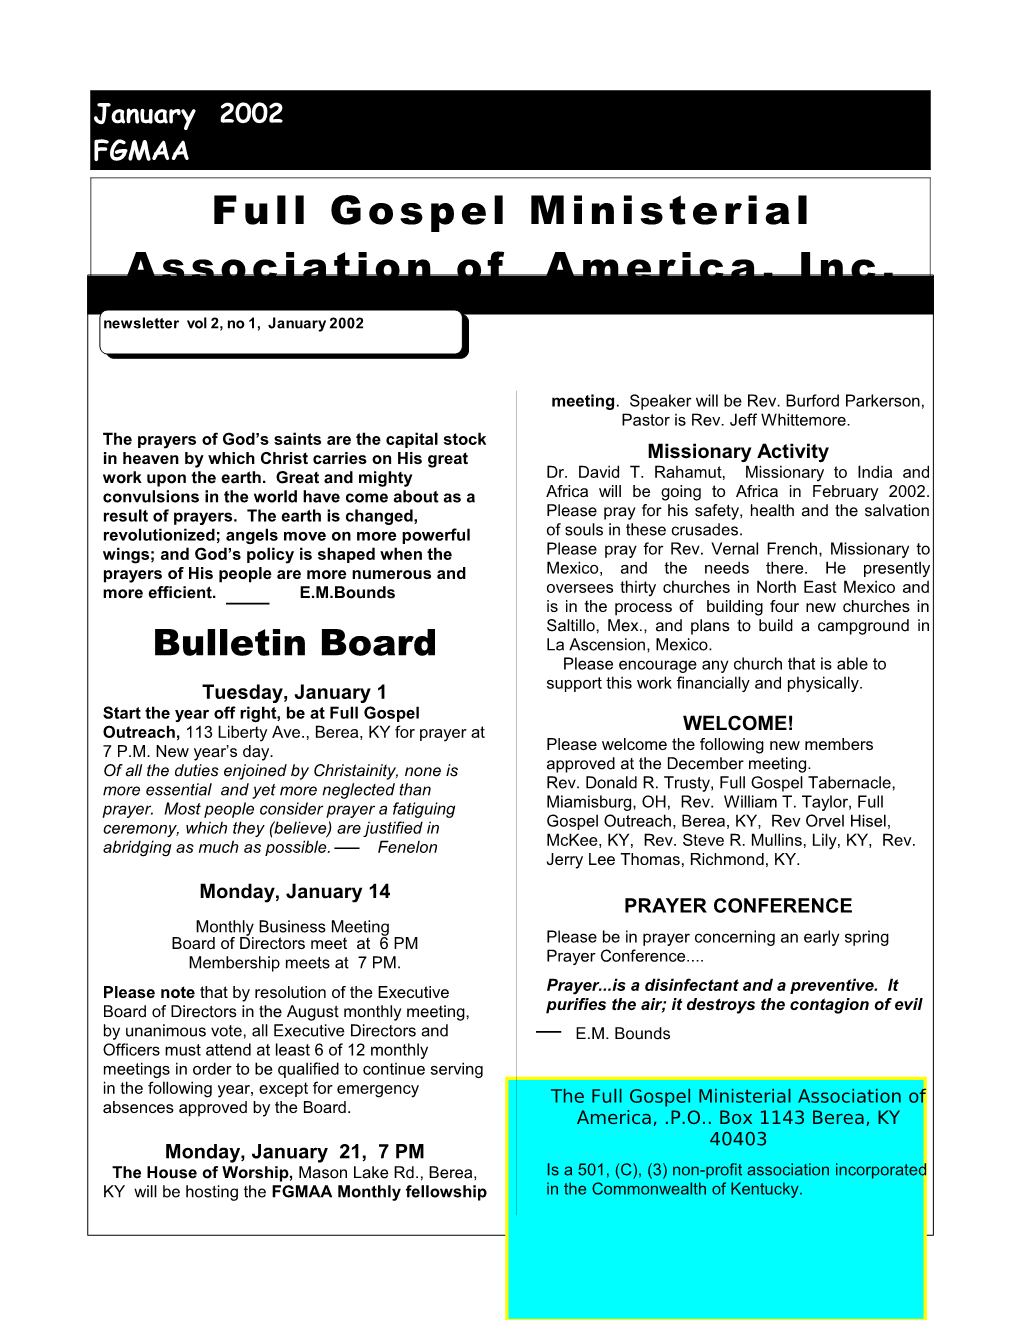 Full Gospel Ministerial Association of America, Inc s1